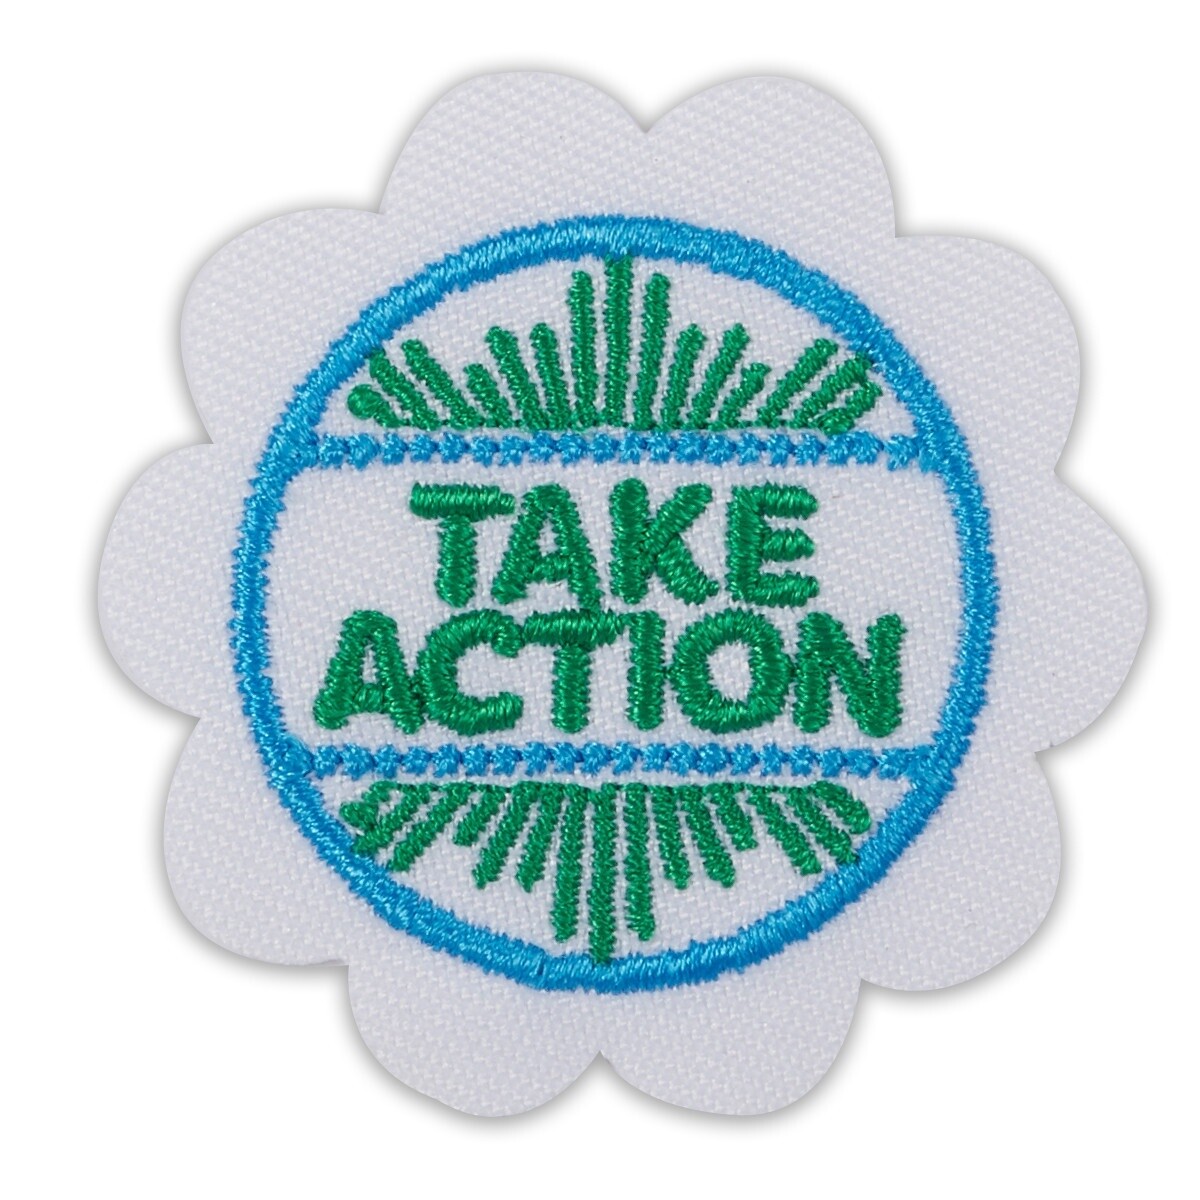 Daisy Take Action Award Badge